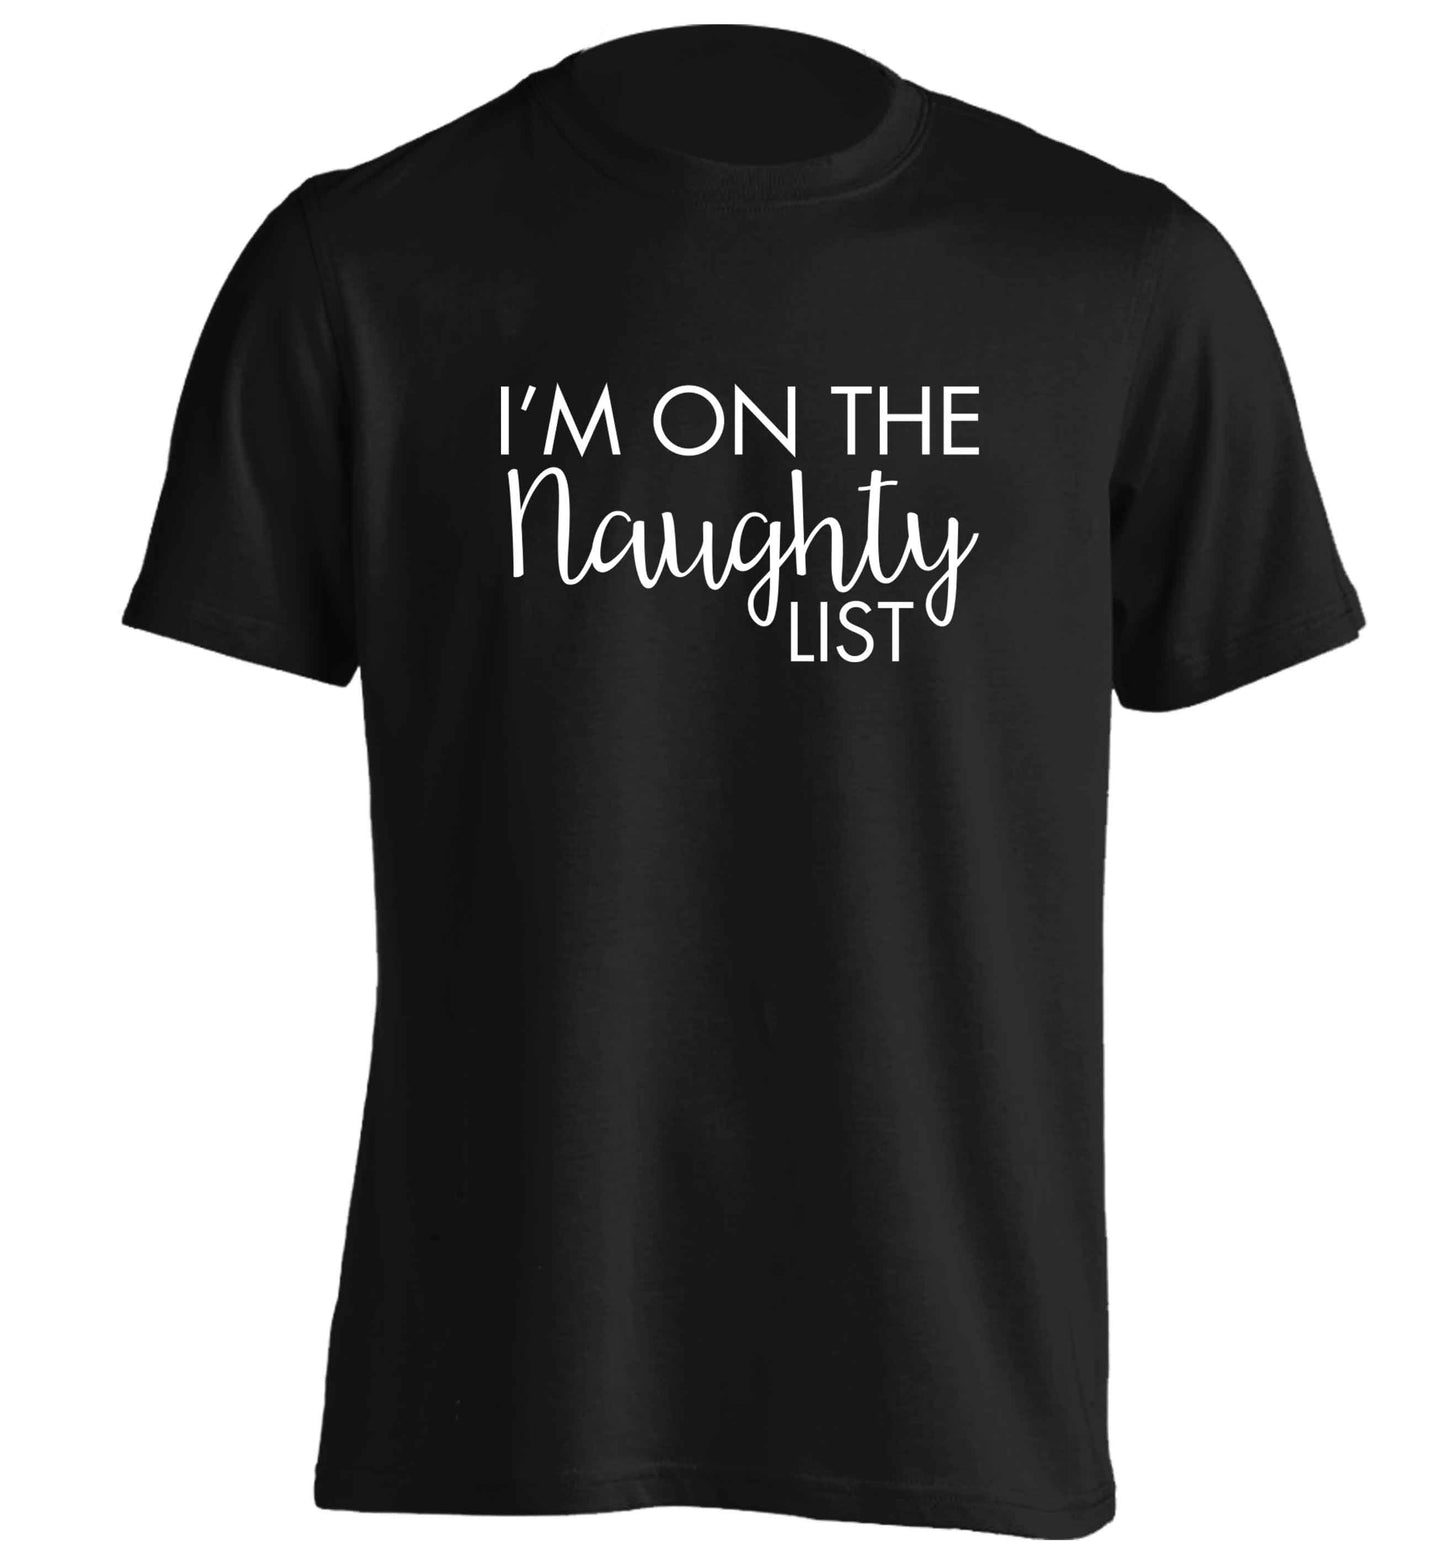 I'm on the naughty list adults unisex black Tshirt 2XL